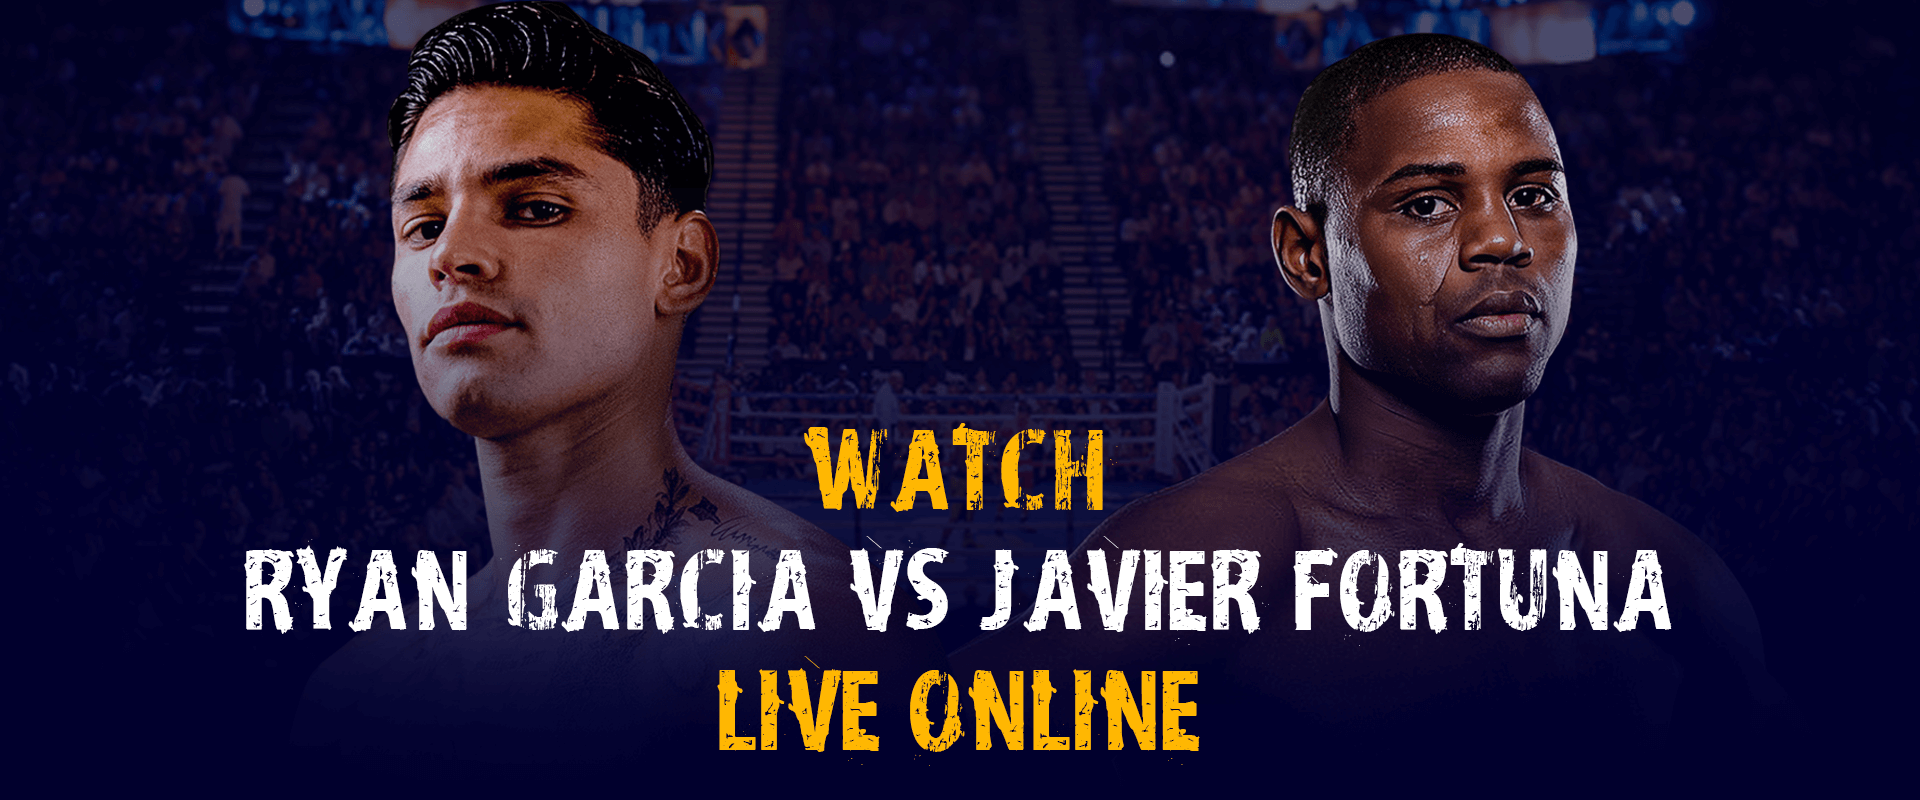 How to Watch Ryan Garcia vs Javier Fortuna Live Online